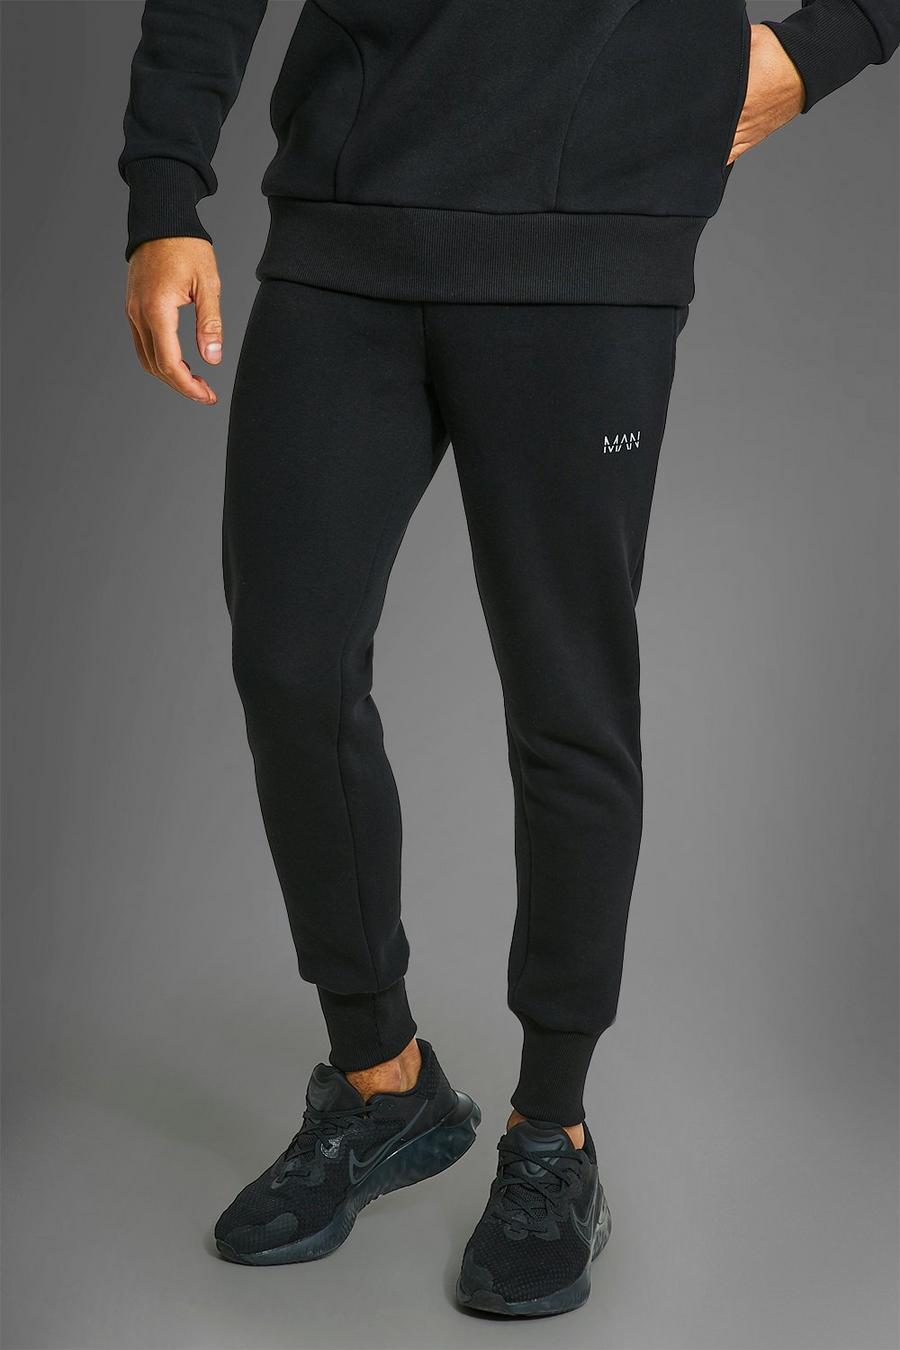 Pantaloni tuta Man Active Gym a coste profonde con tasche e zip, Black image number 1